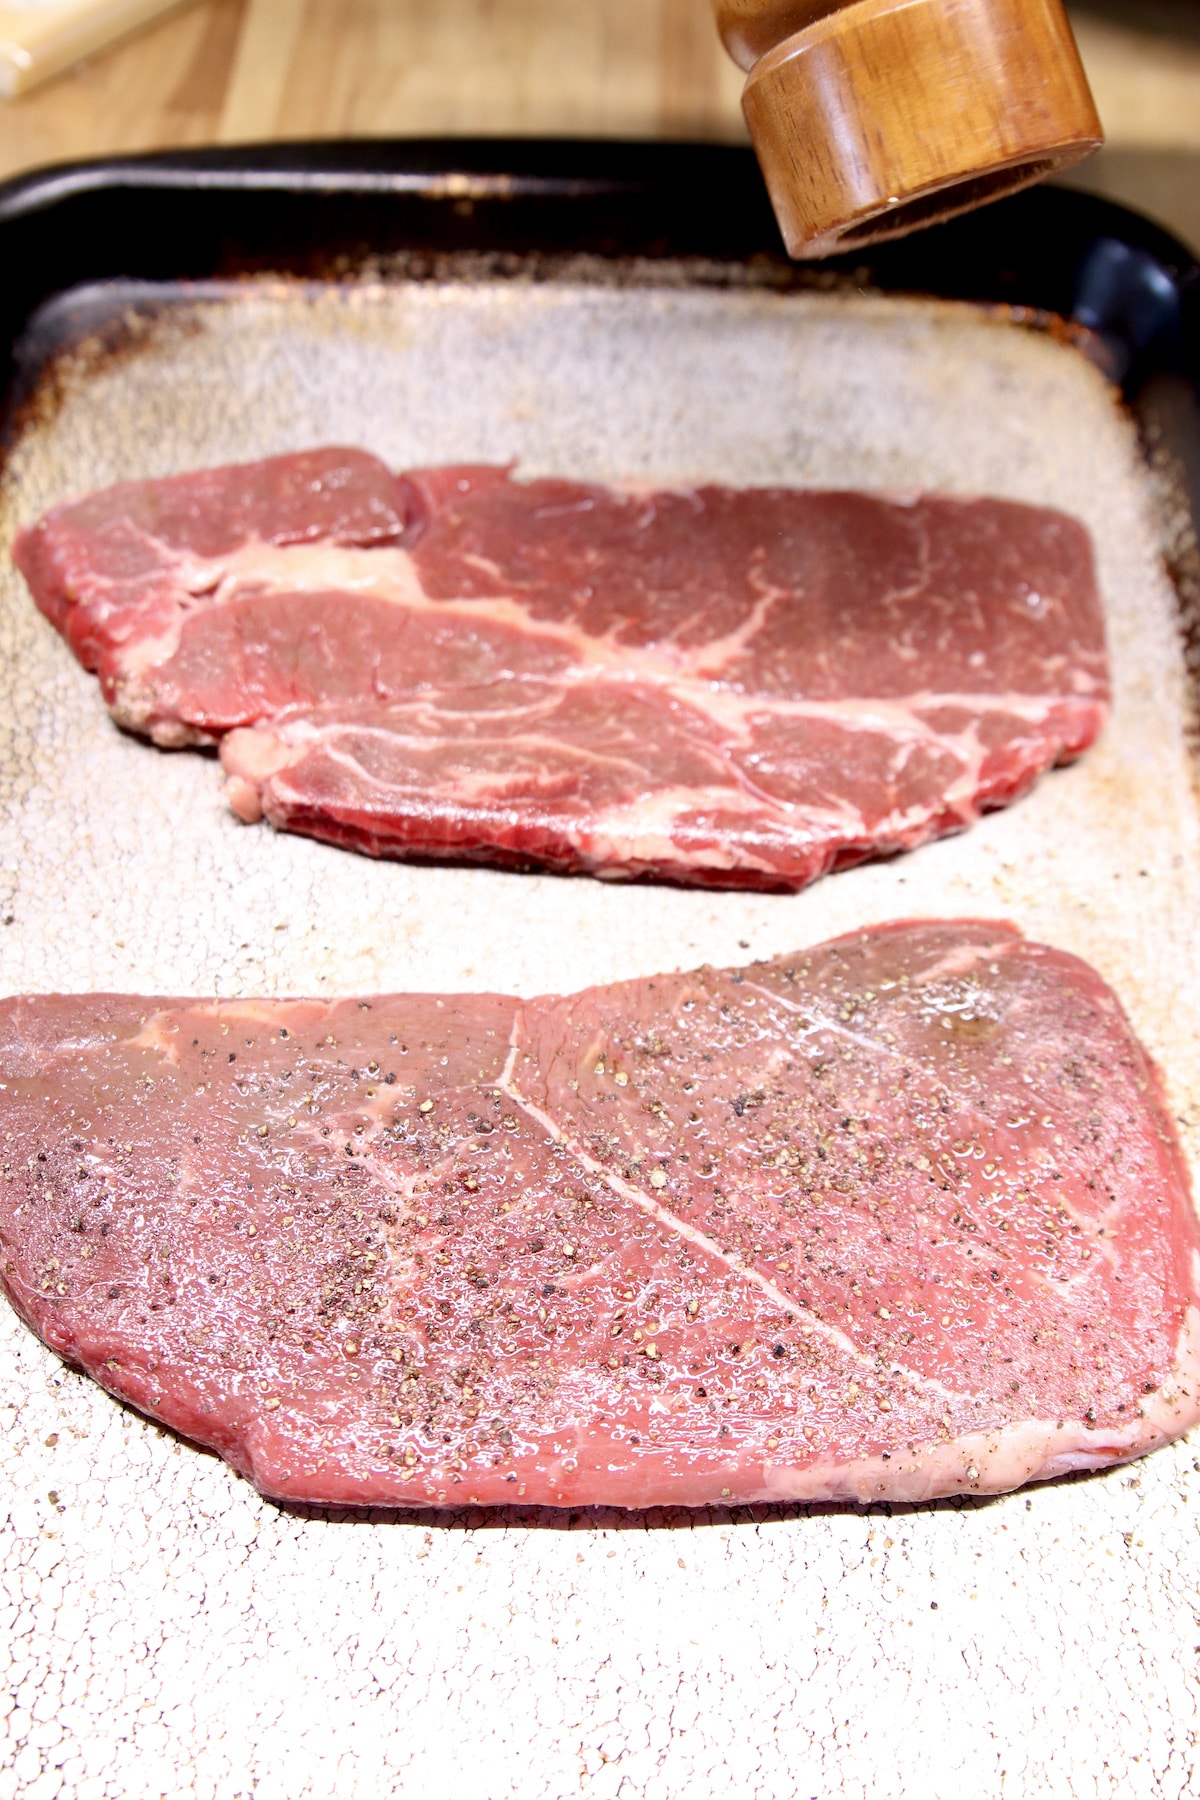 seasoning sirloin steak for grilling.